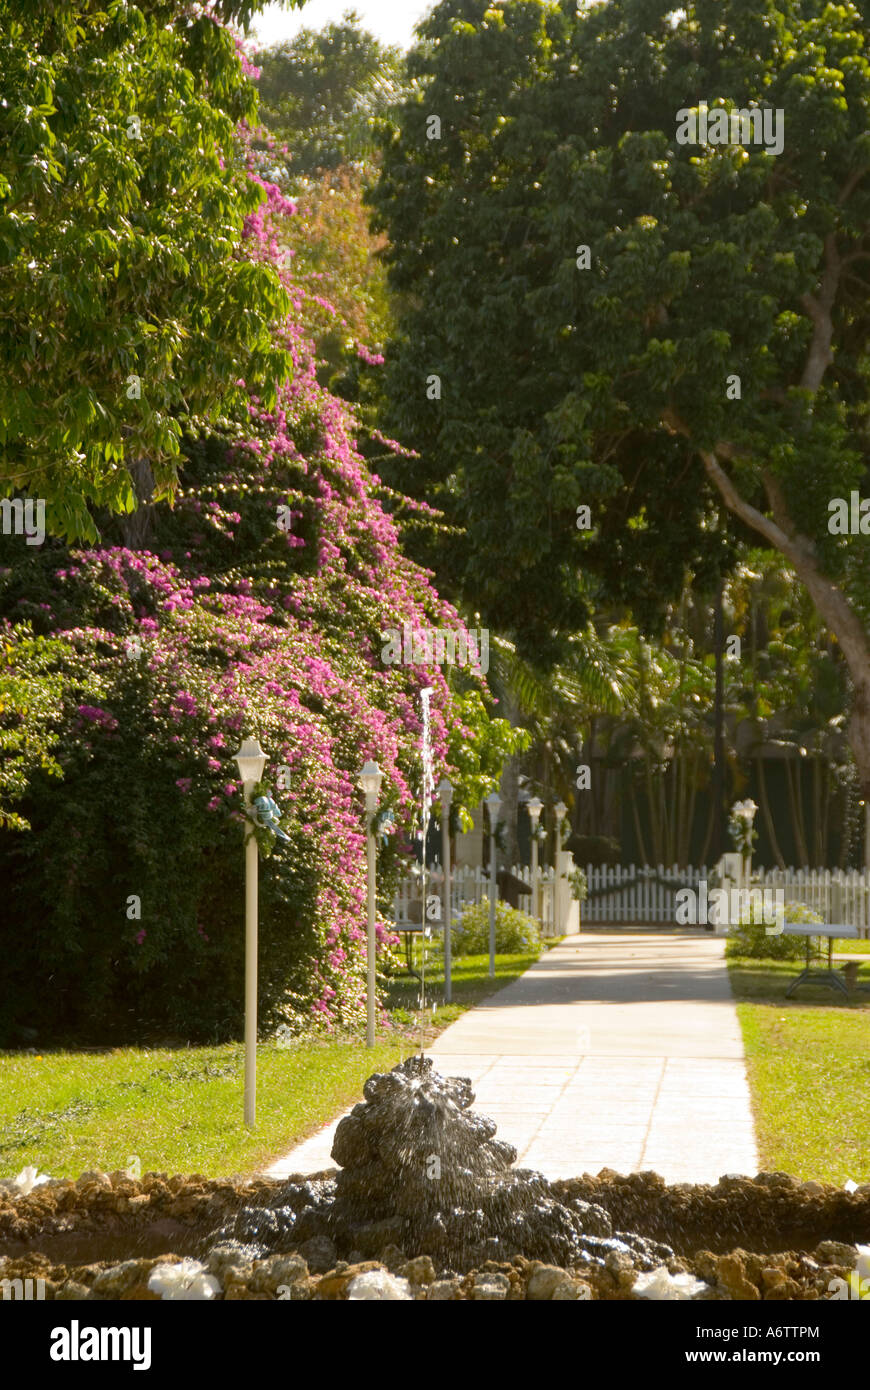 Thomas Edison winter home estate Fort Myers Florida garden walkway purple flowers trees Stock Photo